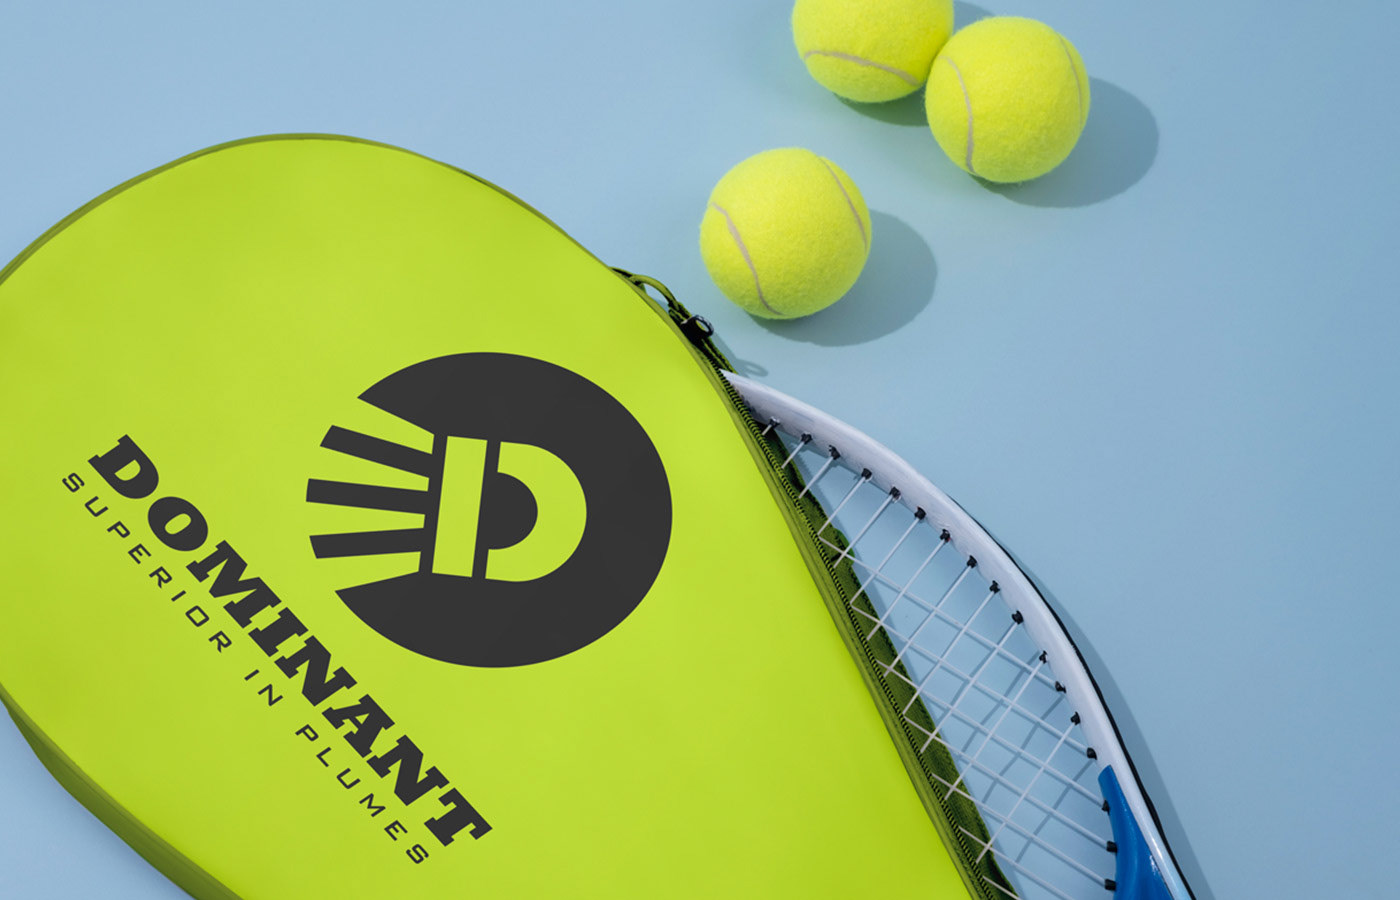 Sports packaging logo Mockup badminton Racket bag Design 